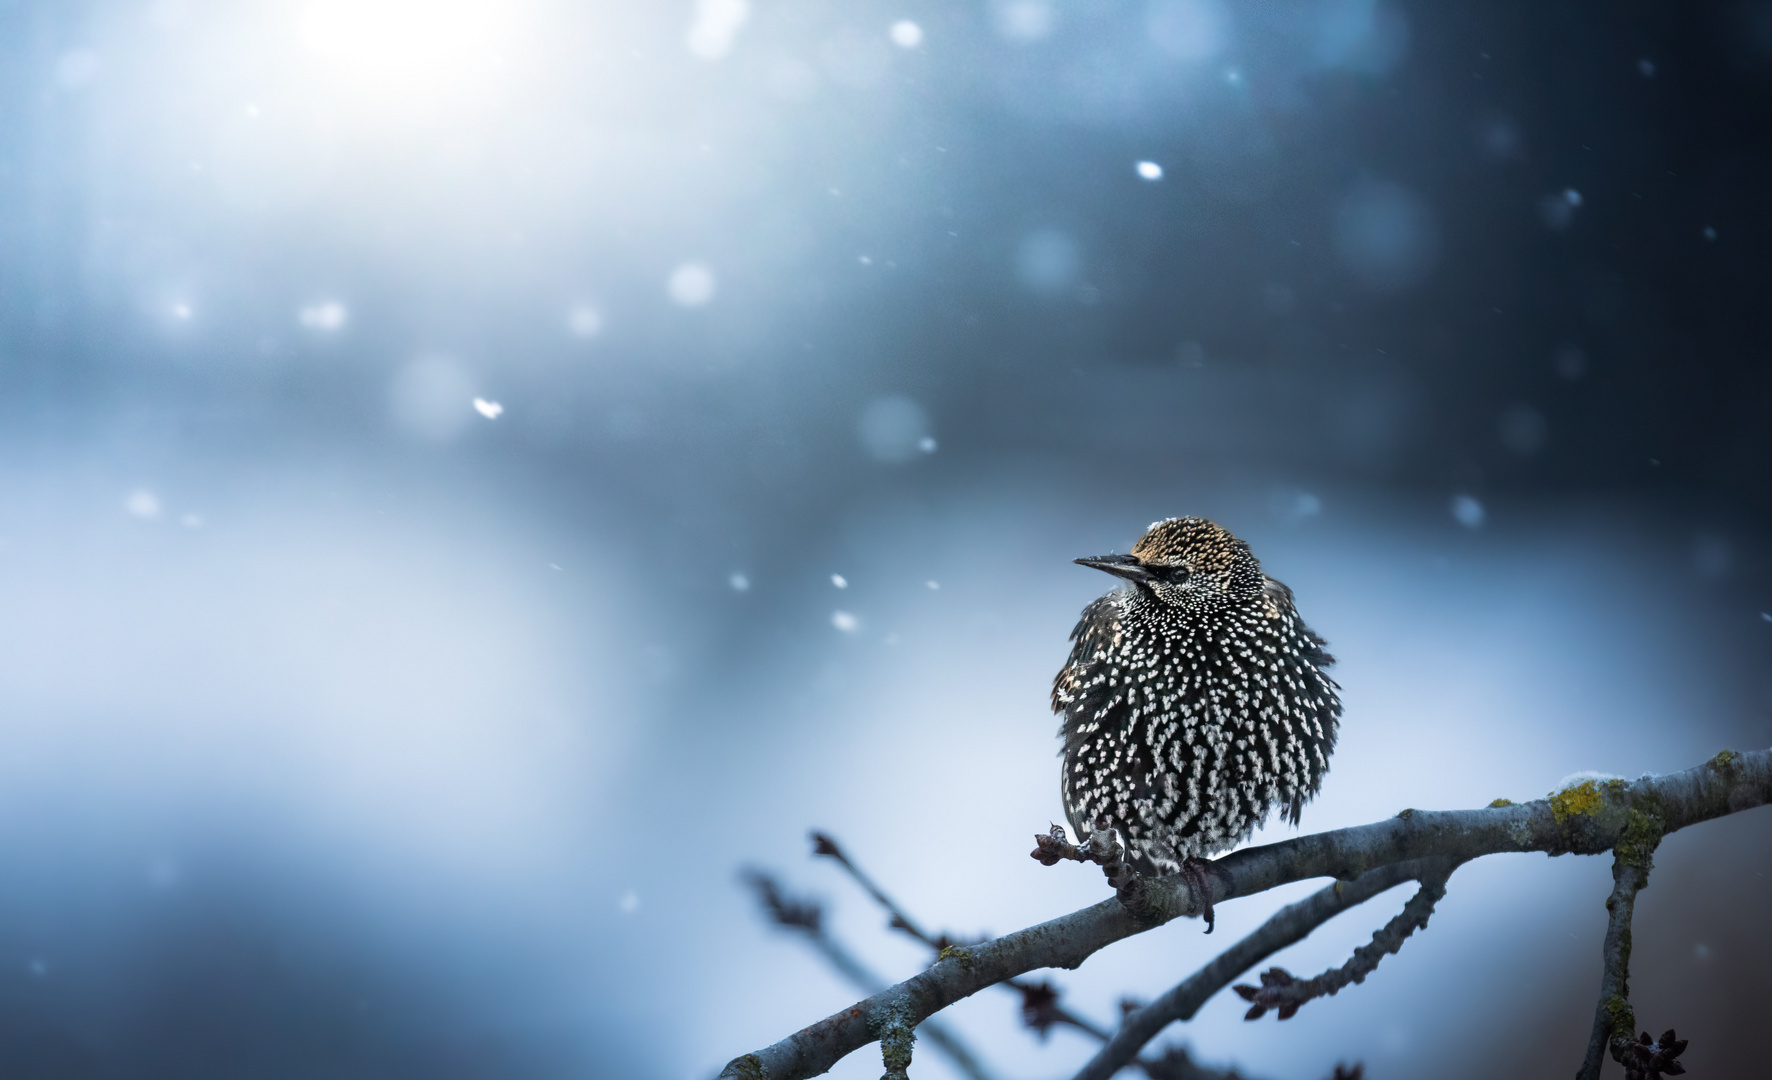 A starling's winter tale